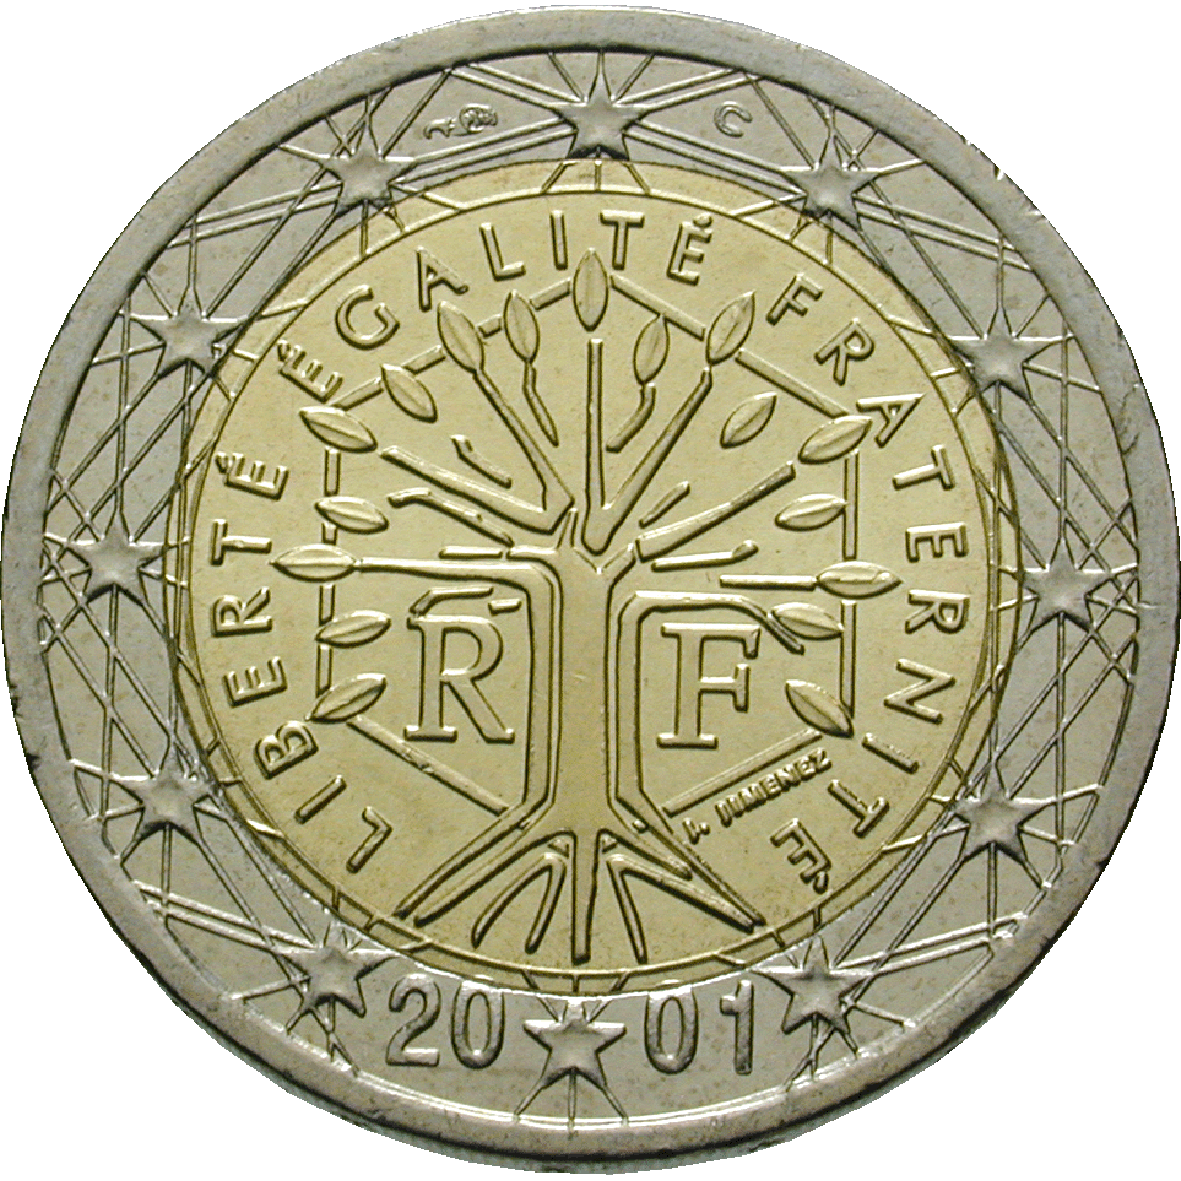 Republic of France, 2 Euros 2001 (reverse)